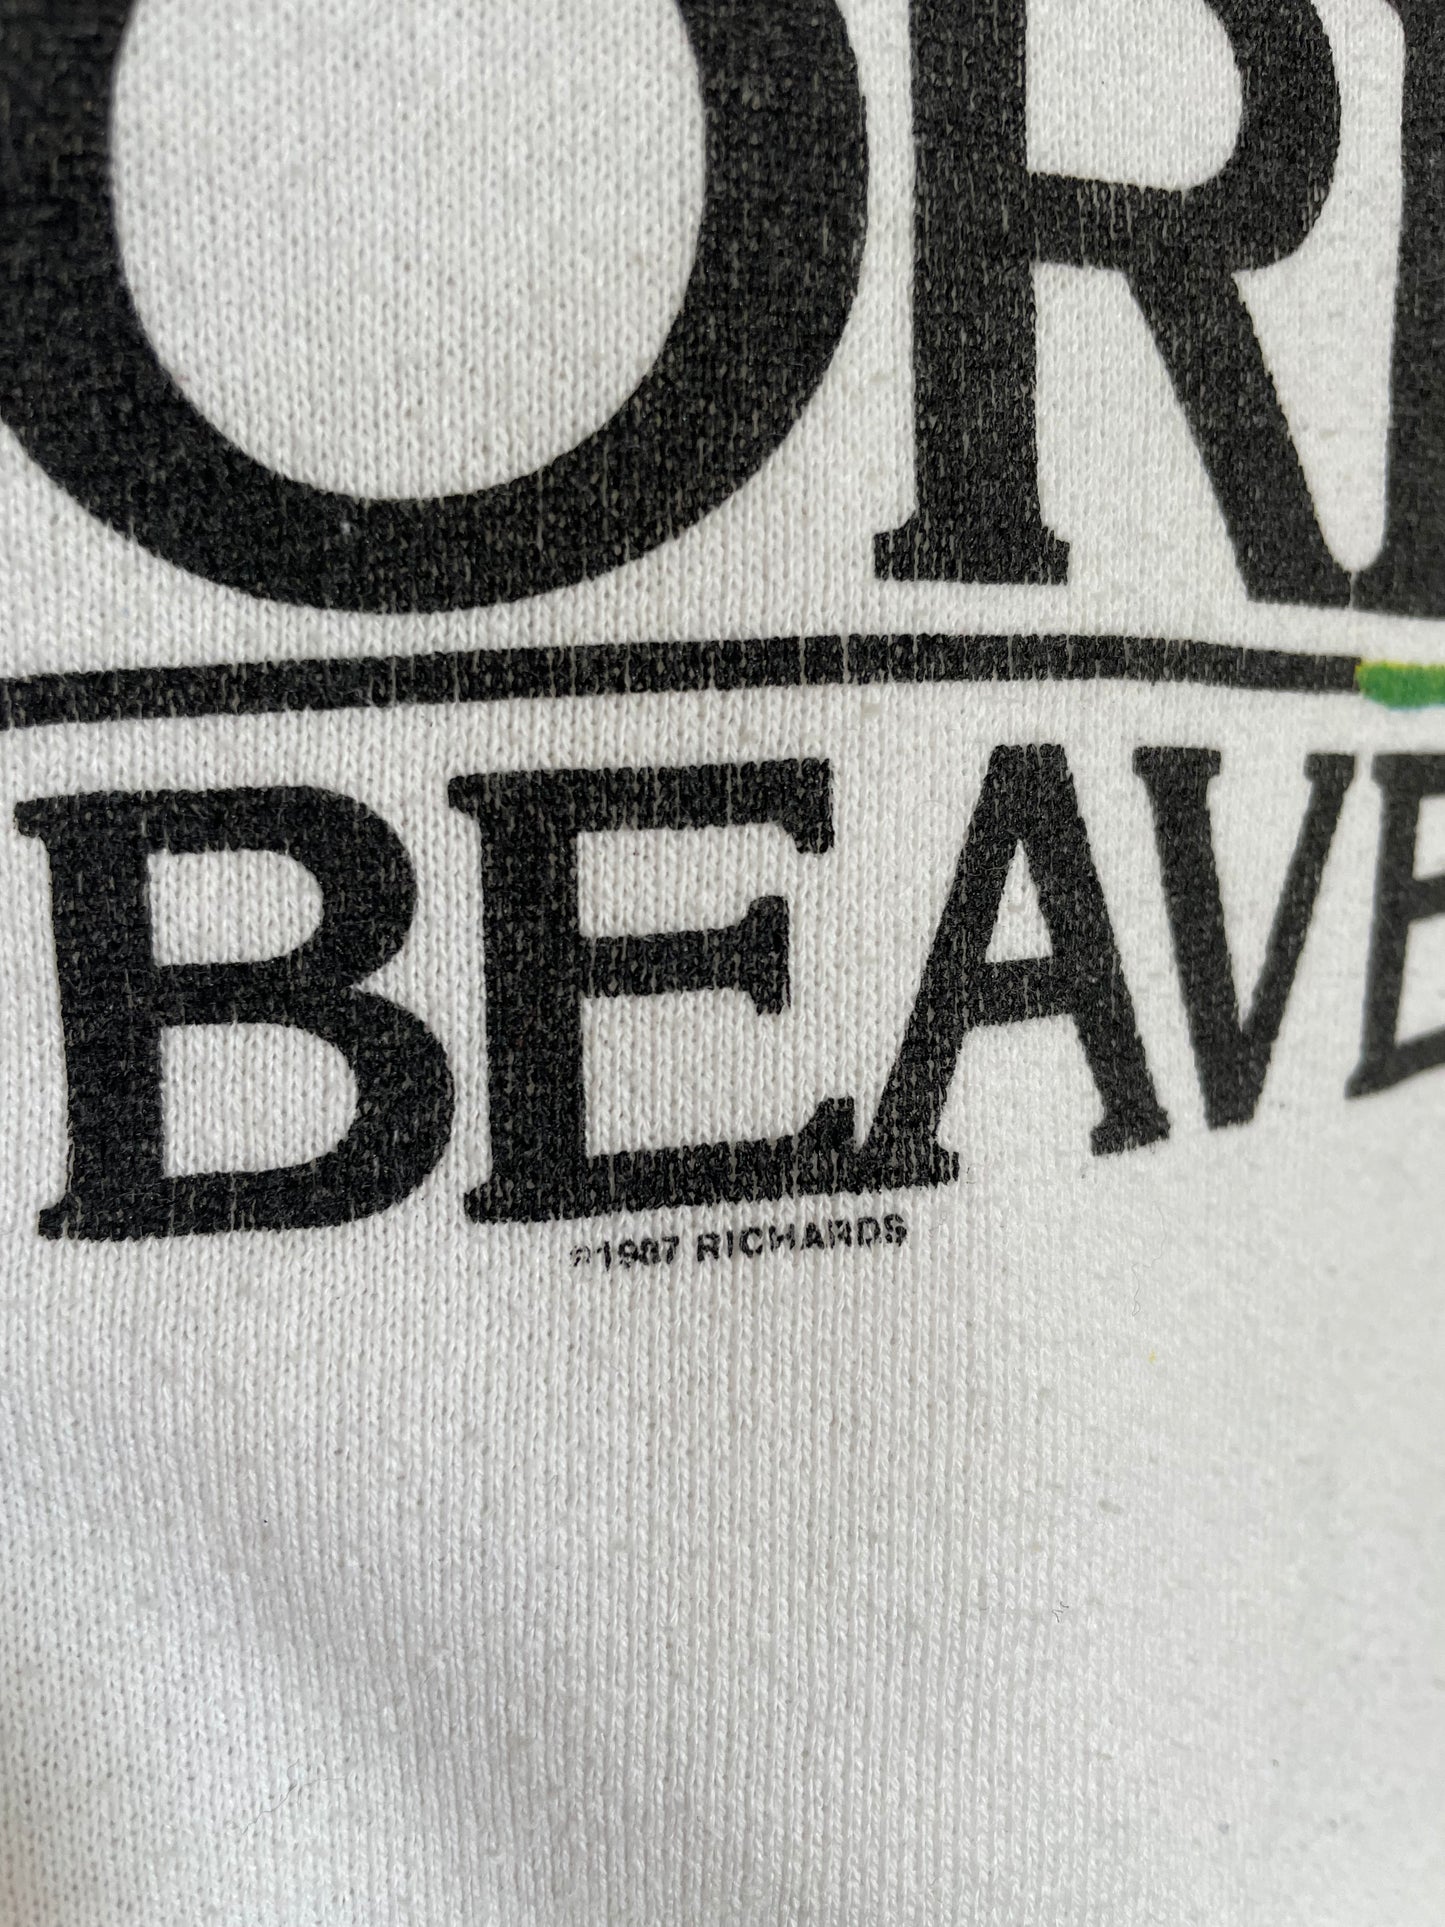 80s Oregon Beaver State Sweatshirt